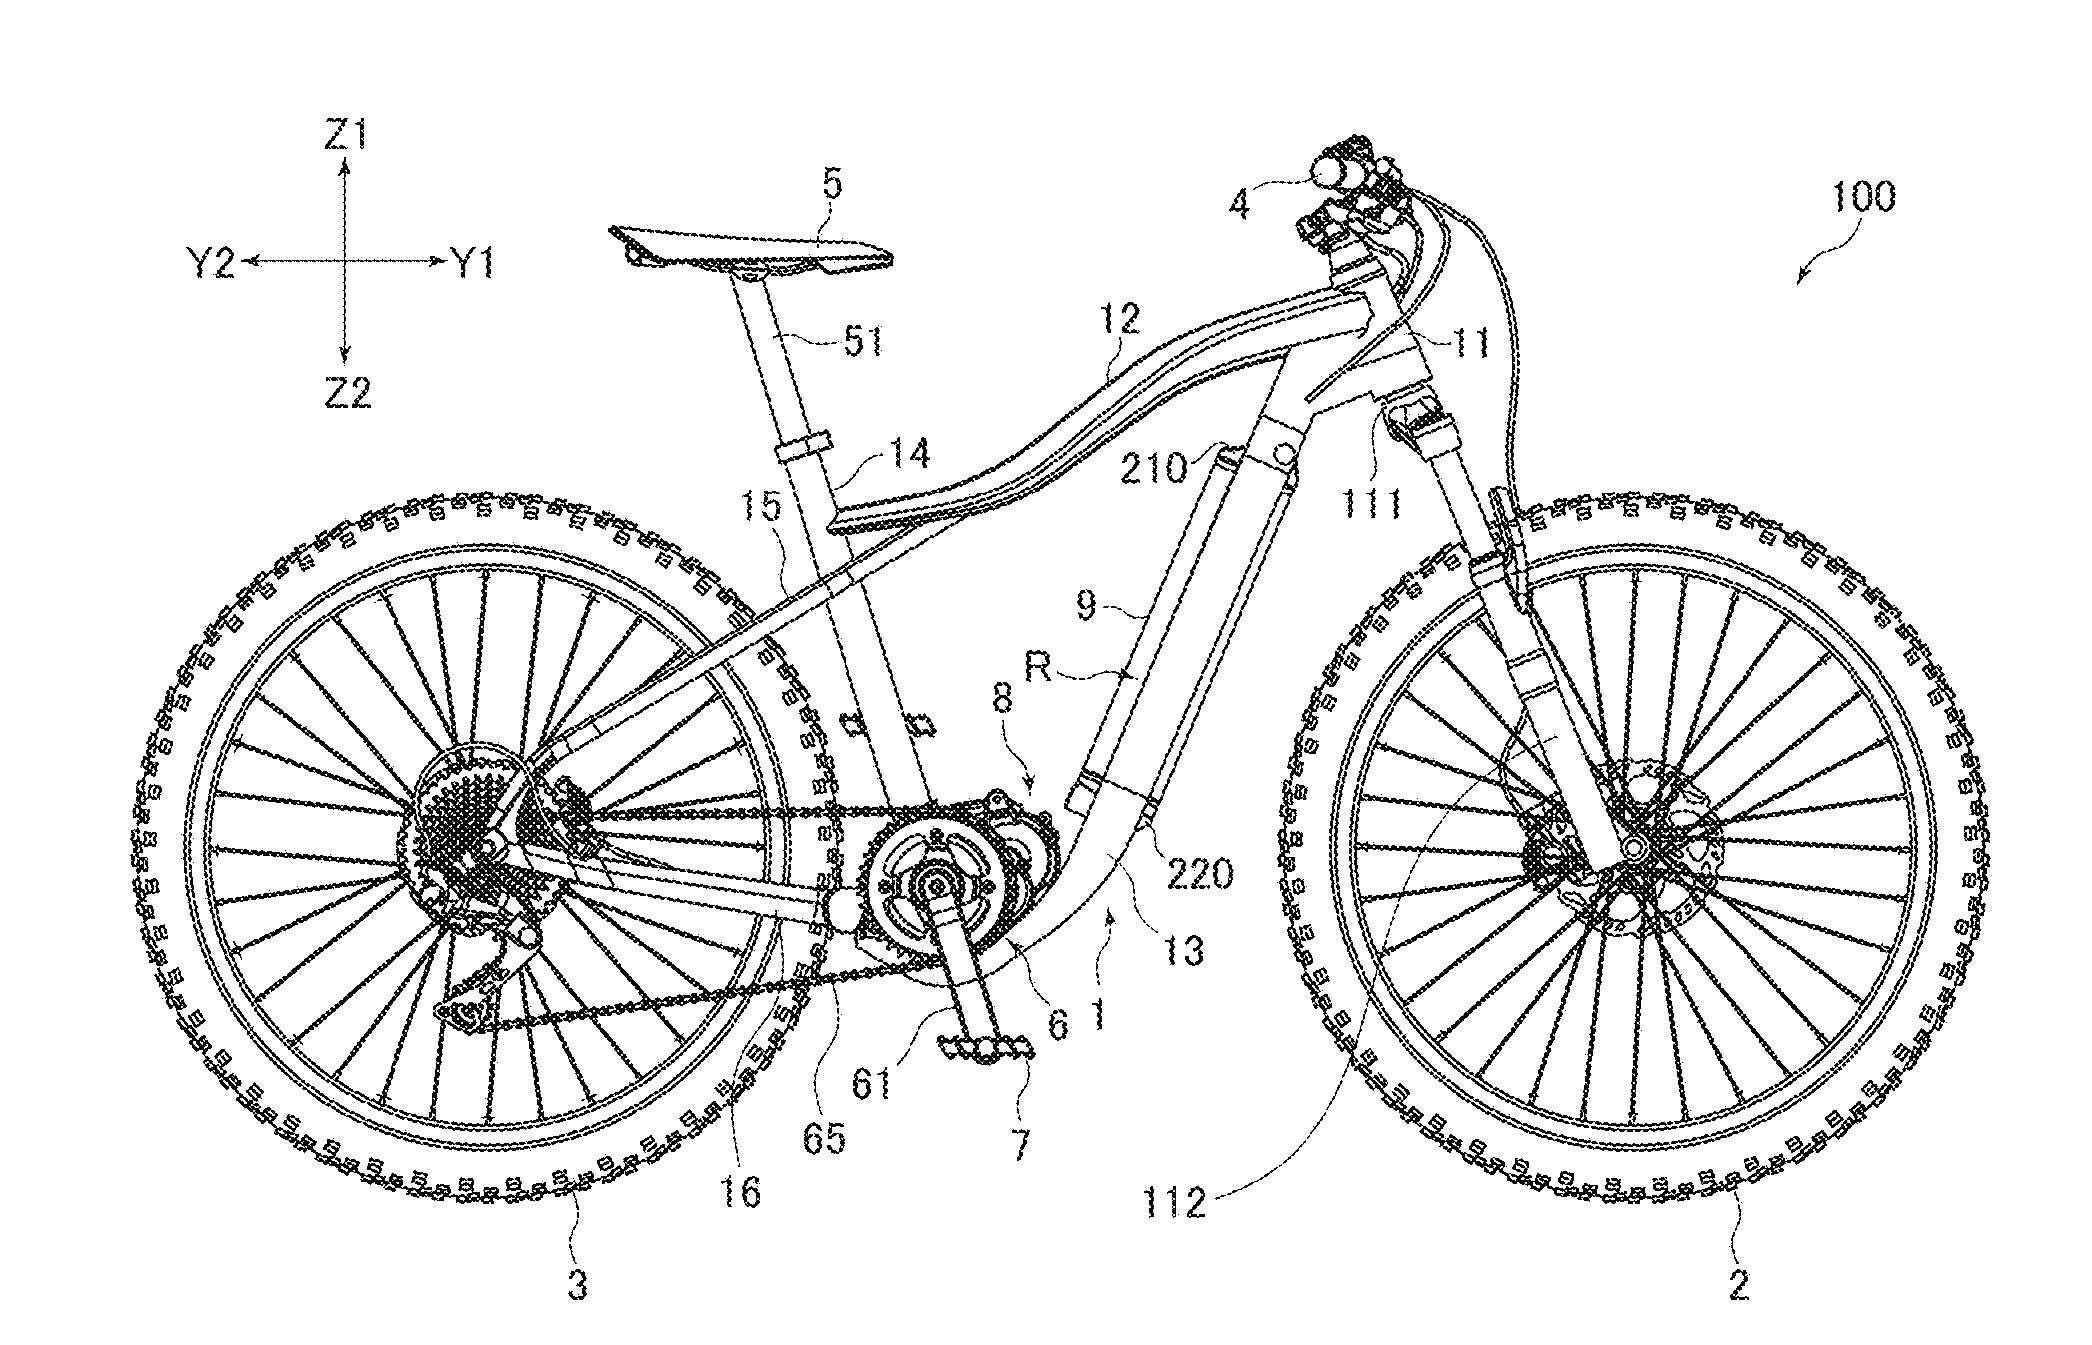 Yamaha's e-bike Frame Patent